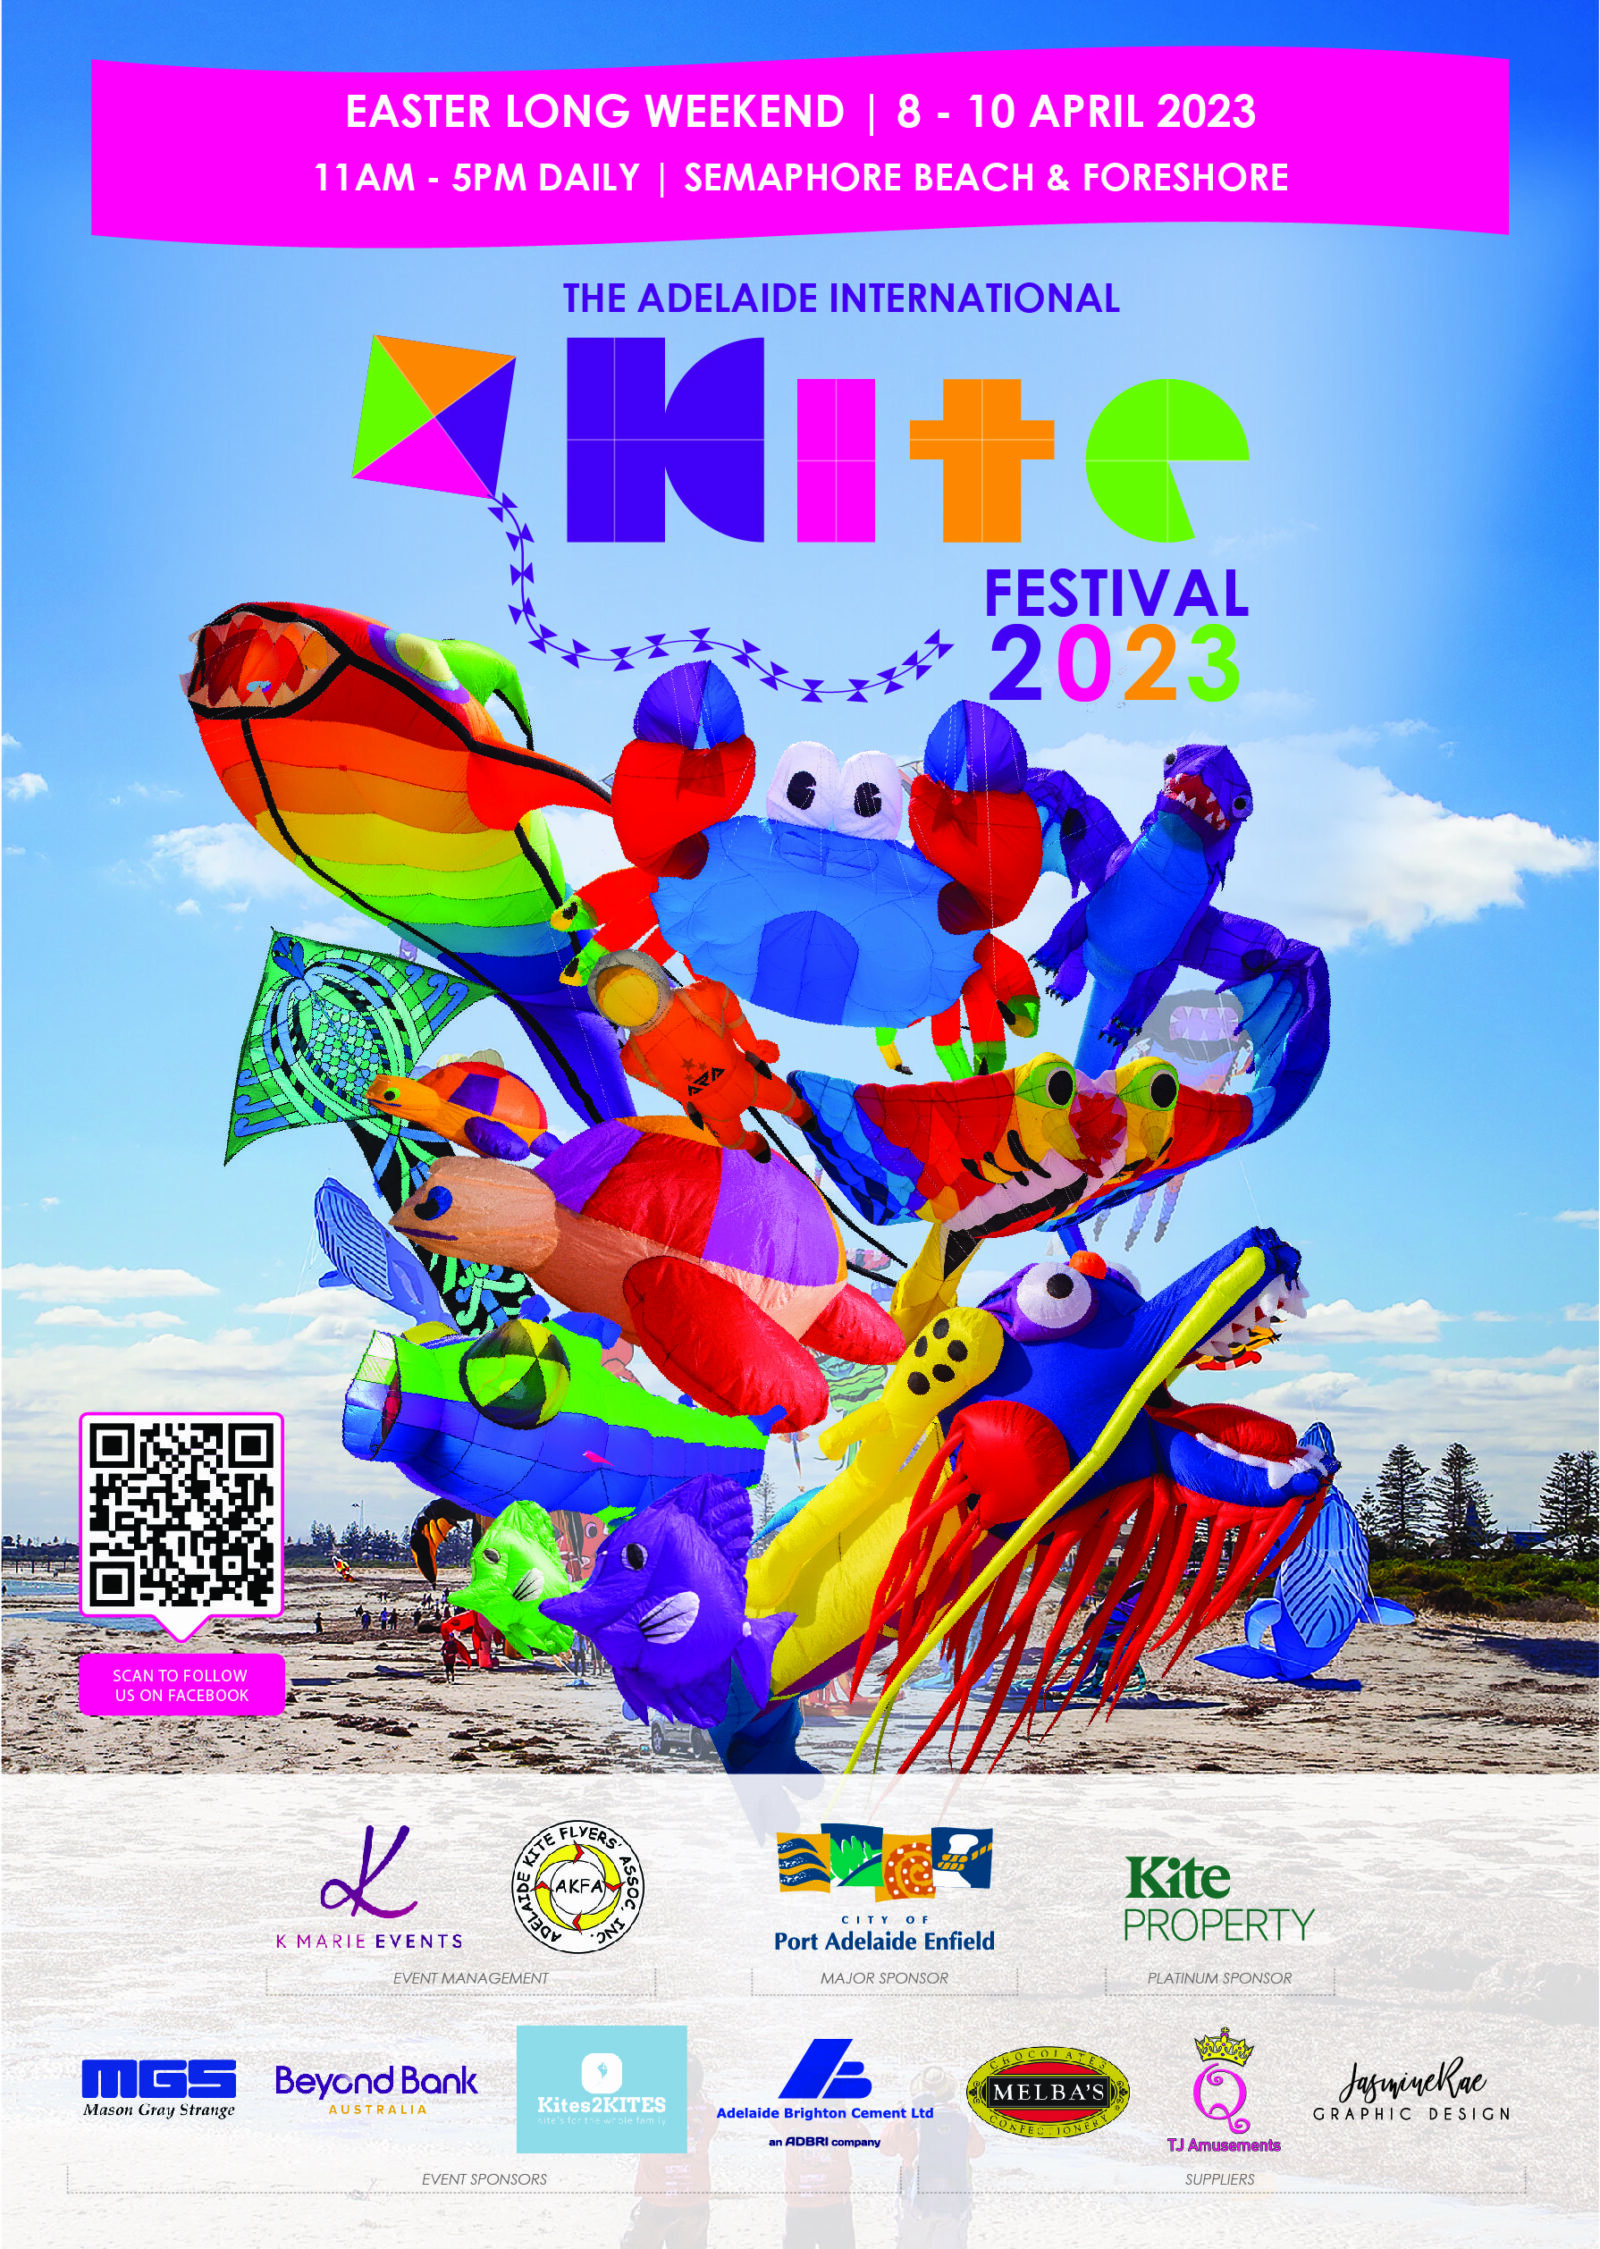 Enjoy the Adelaide International Kite Festival at Semaphore Beach this